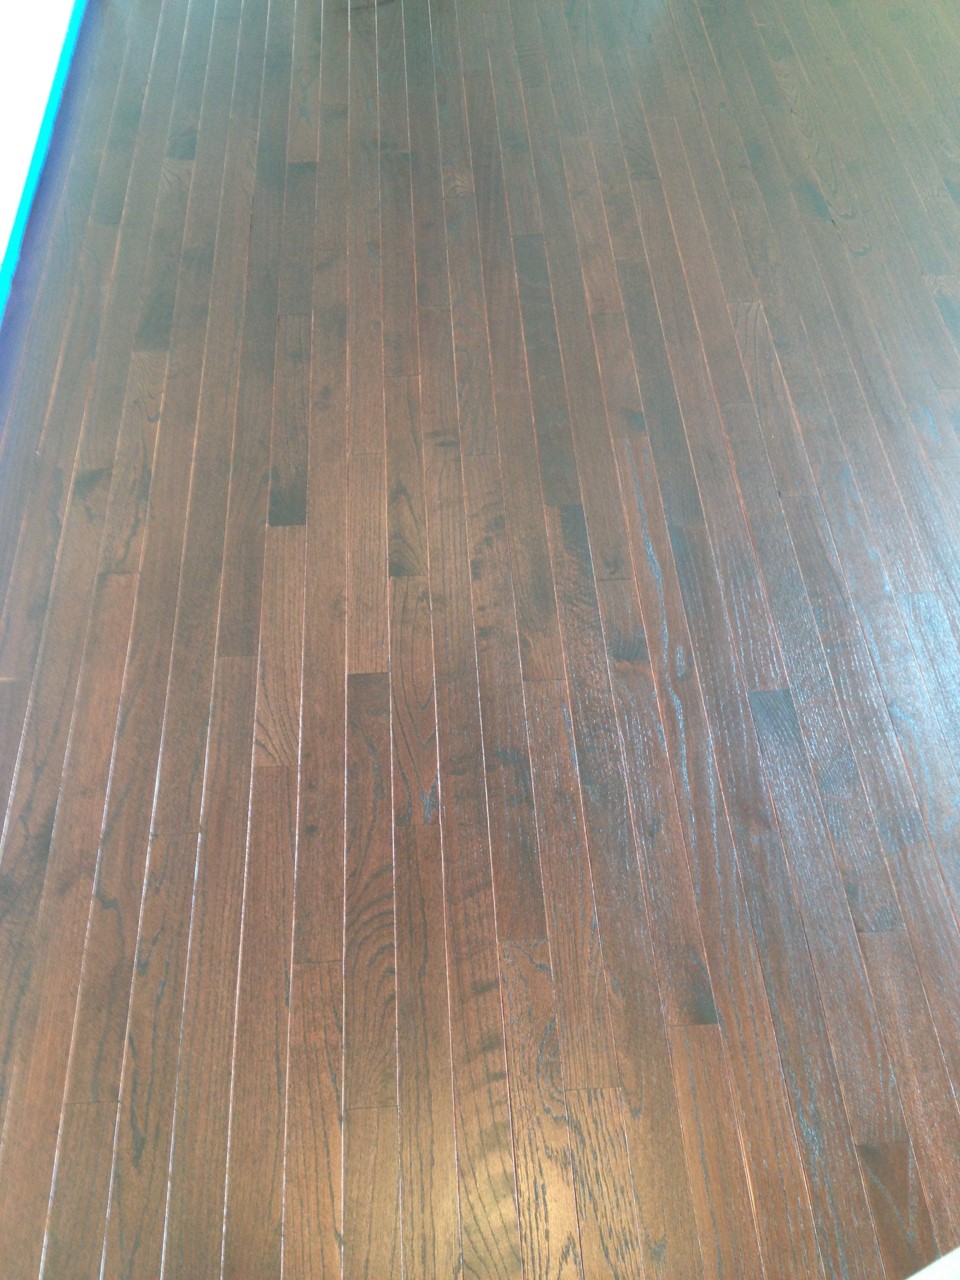 Unfinished Hardwood Flooring, Removing Scratches From Prefinished Hardwood Floors